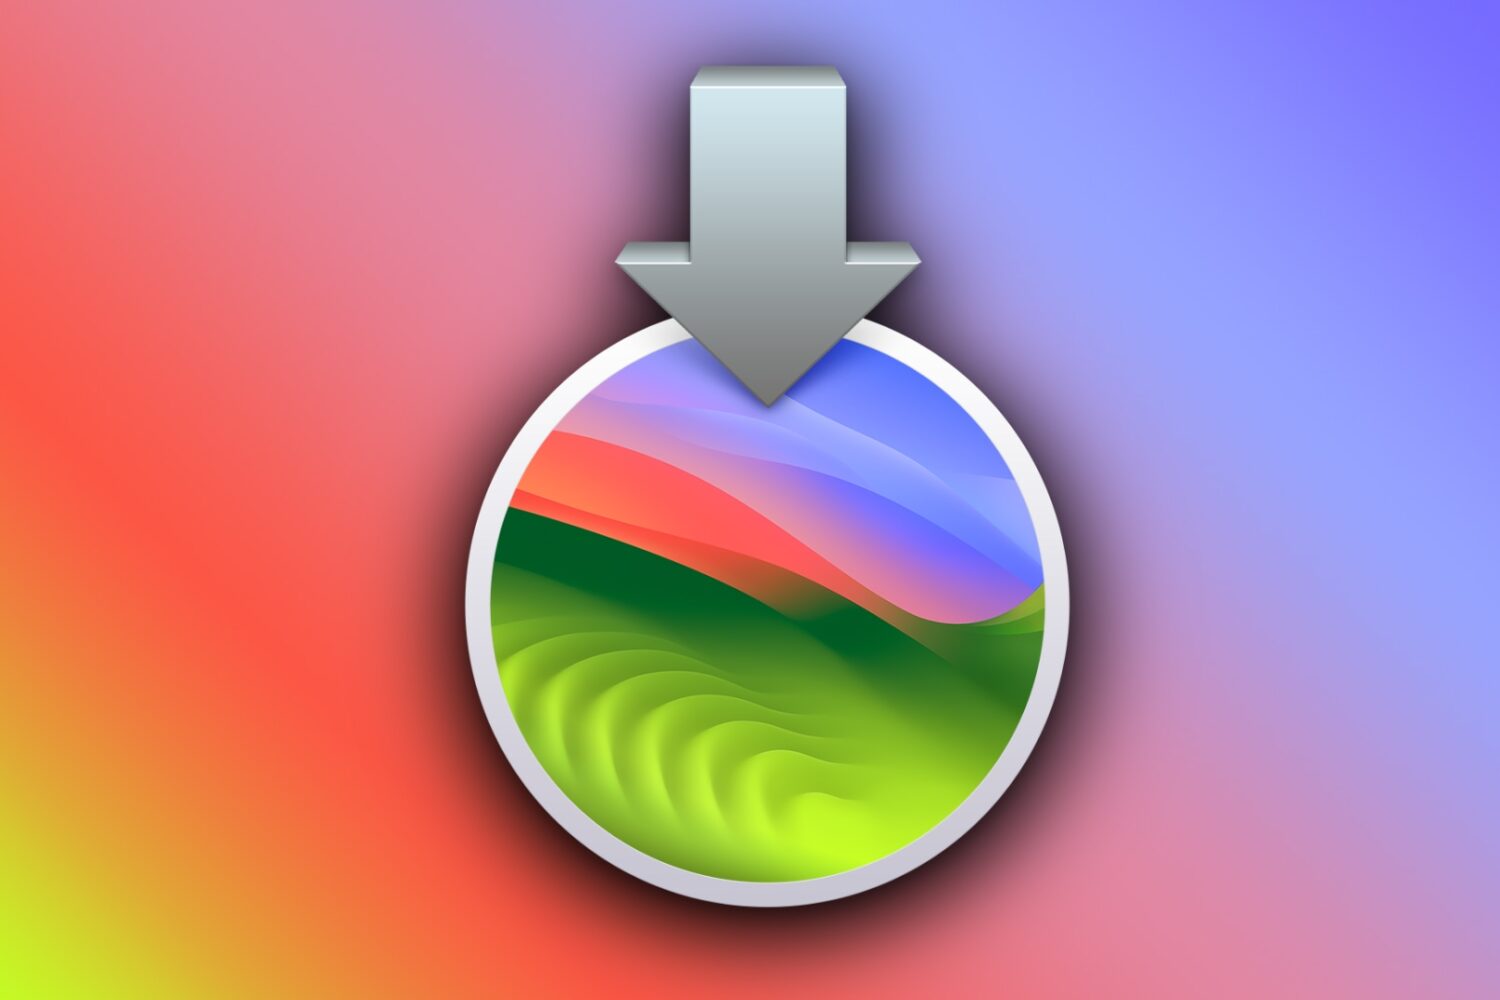 The macOS Sonoma installer icon